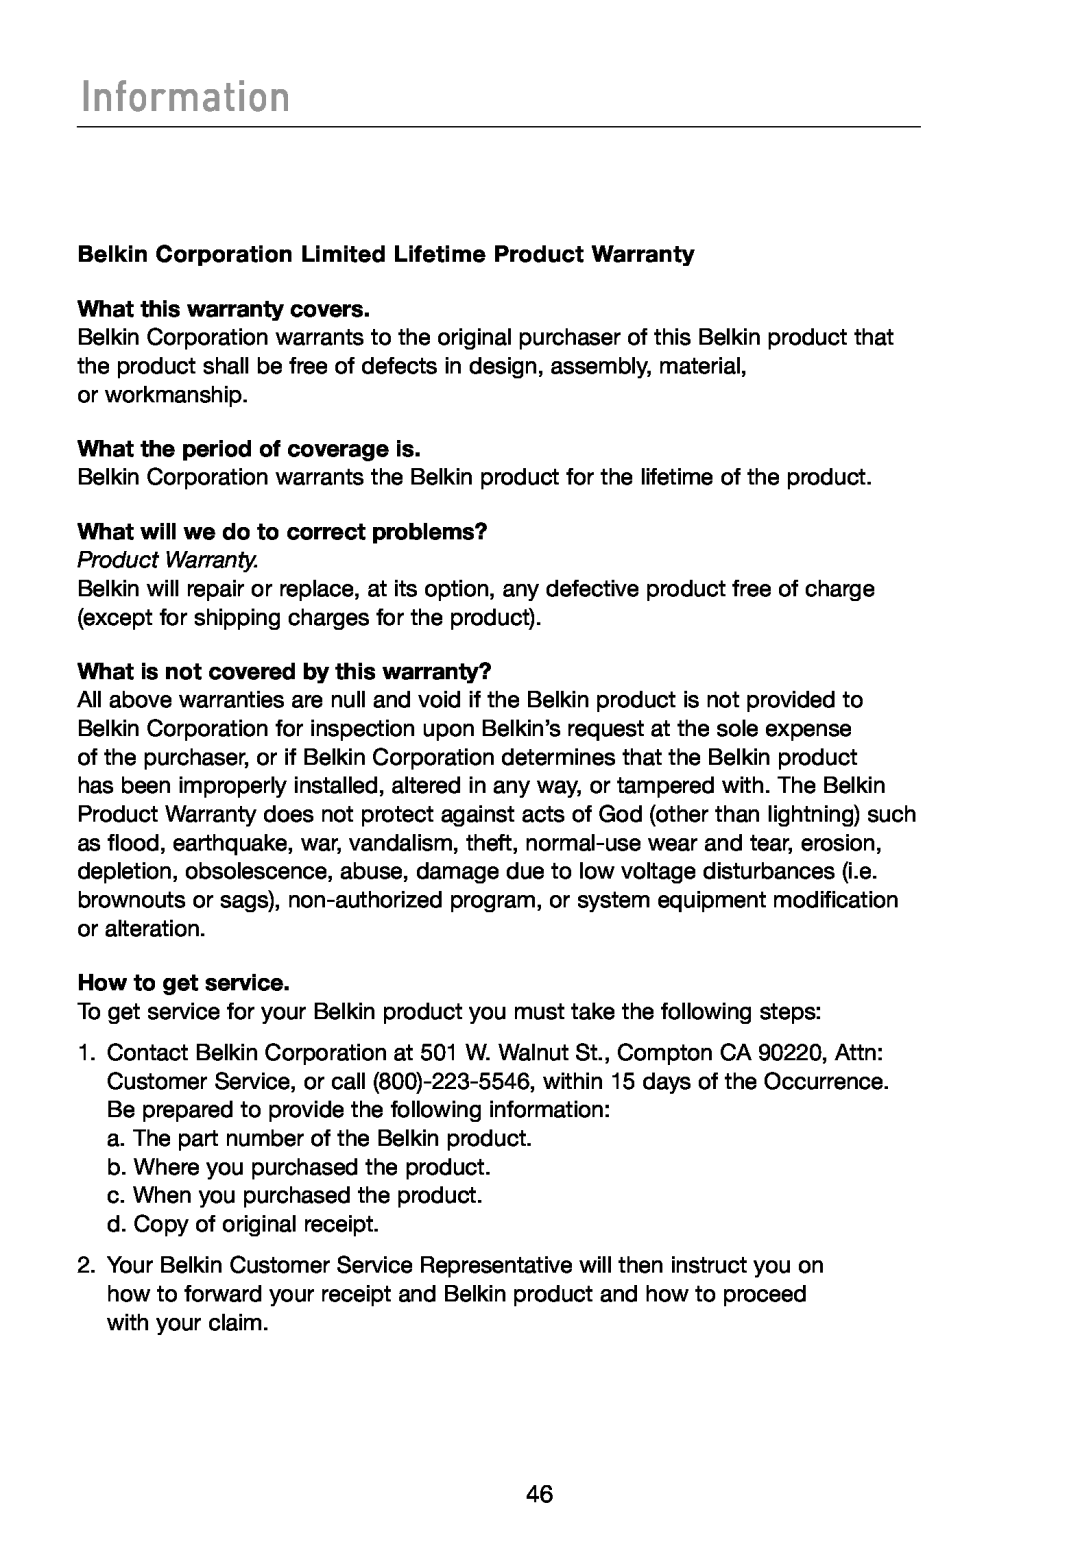 Belkin F5D7330 manual Information, Belkin Corporation Limited Lifetime Product Warranty, What this warranty covers 